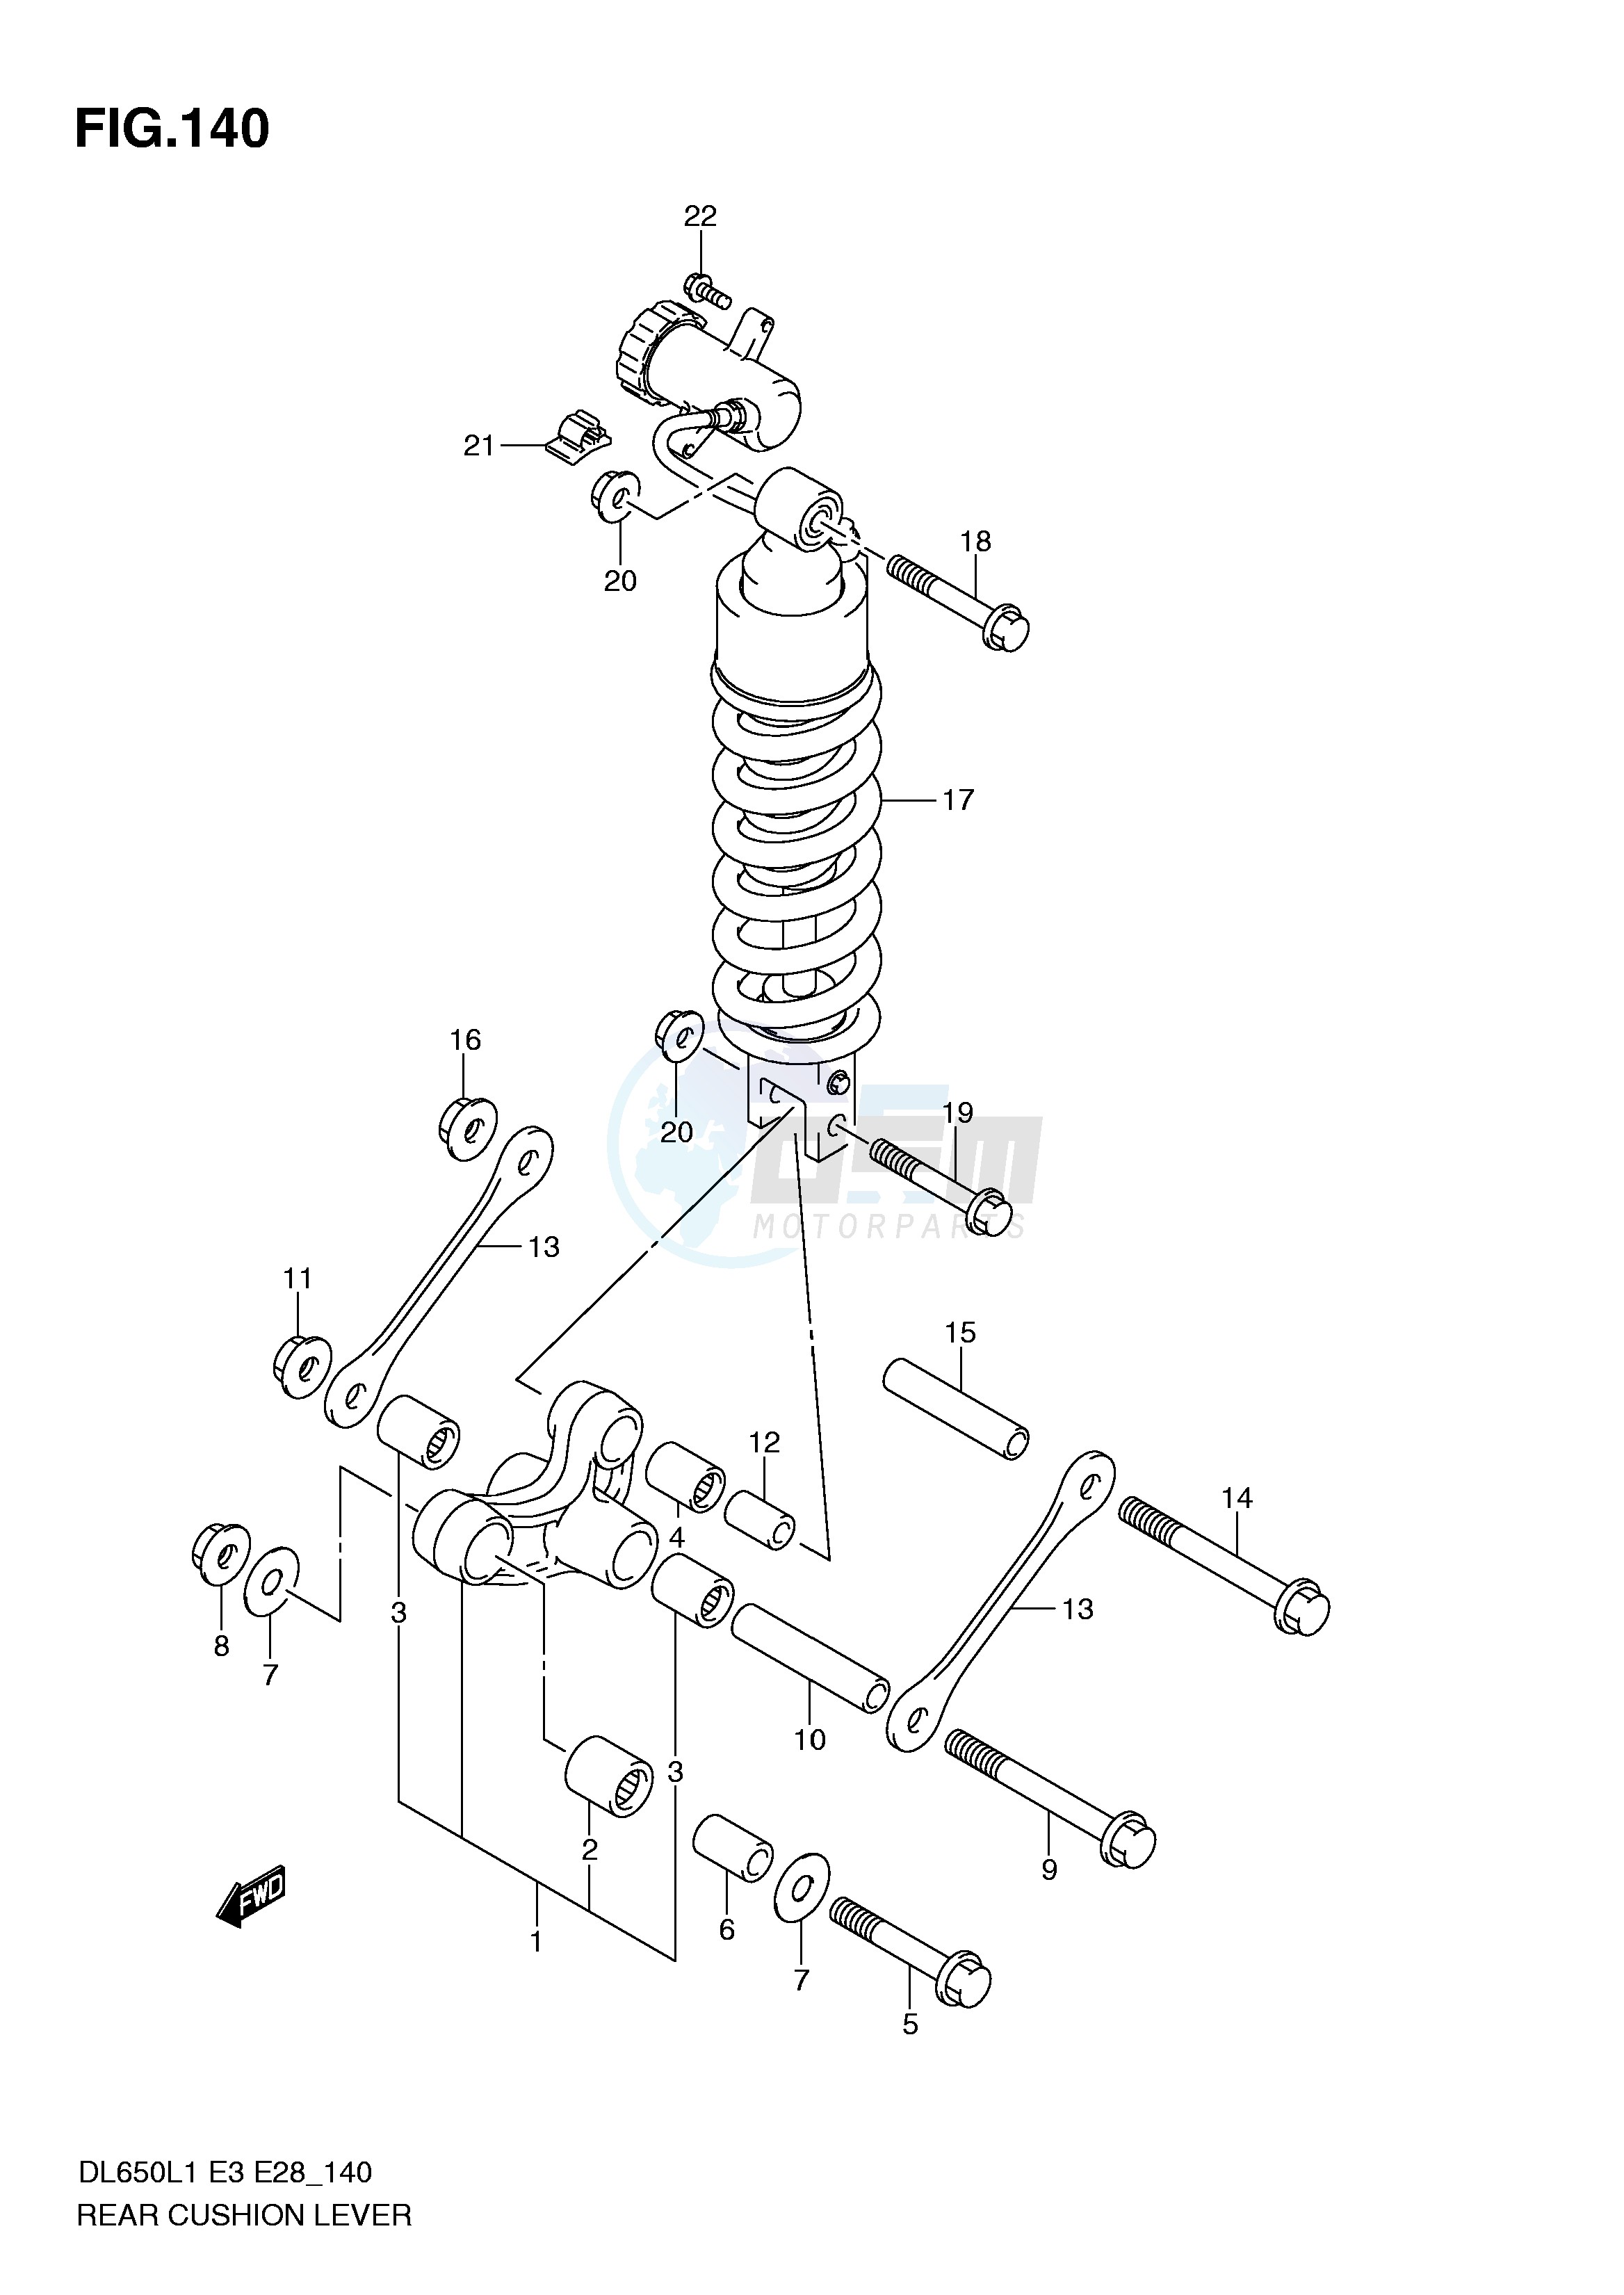 REAR CUSHION LEVER (DL650AL1 E28) blueprint